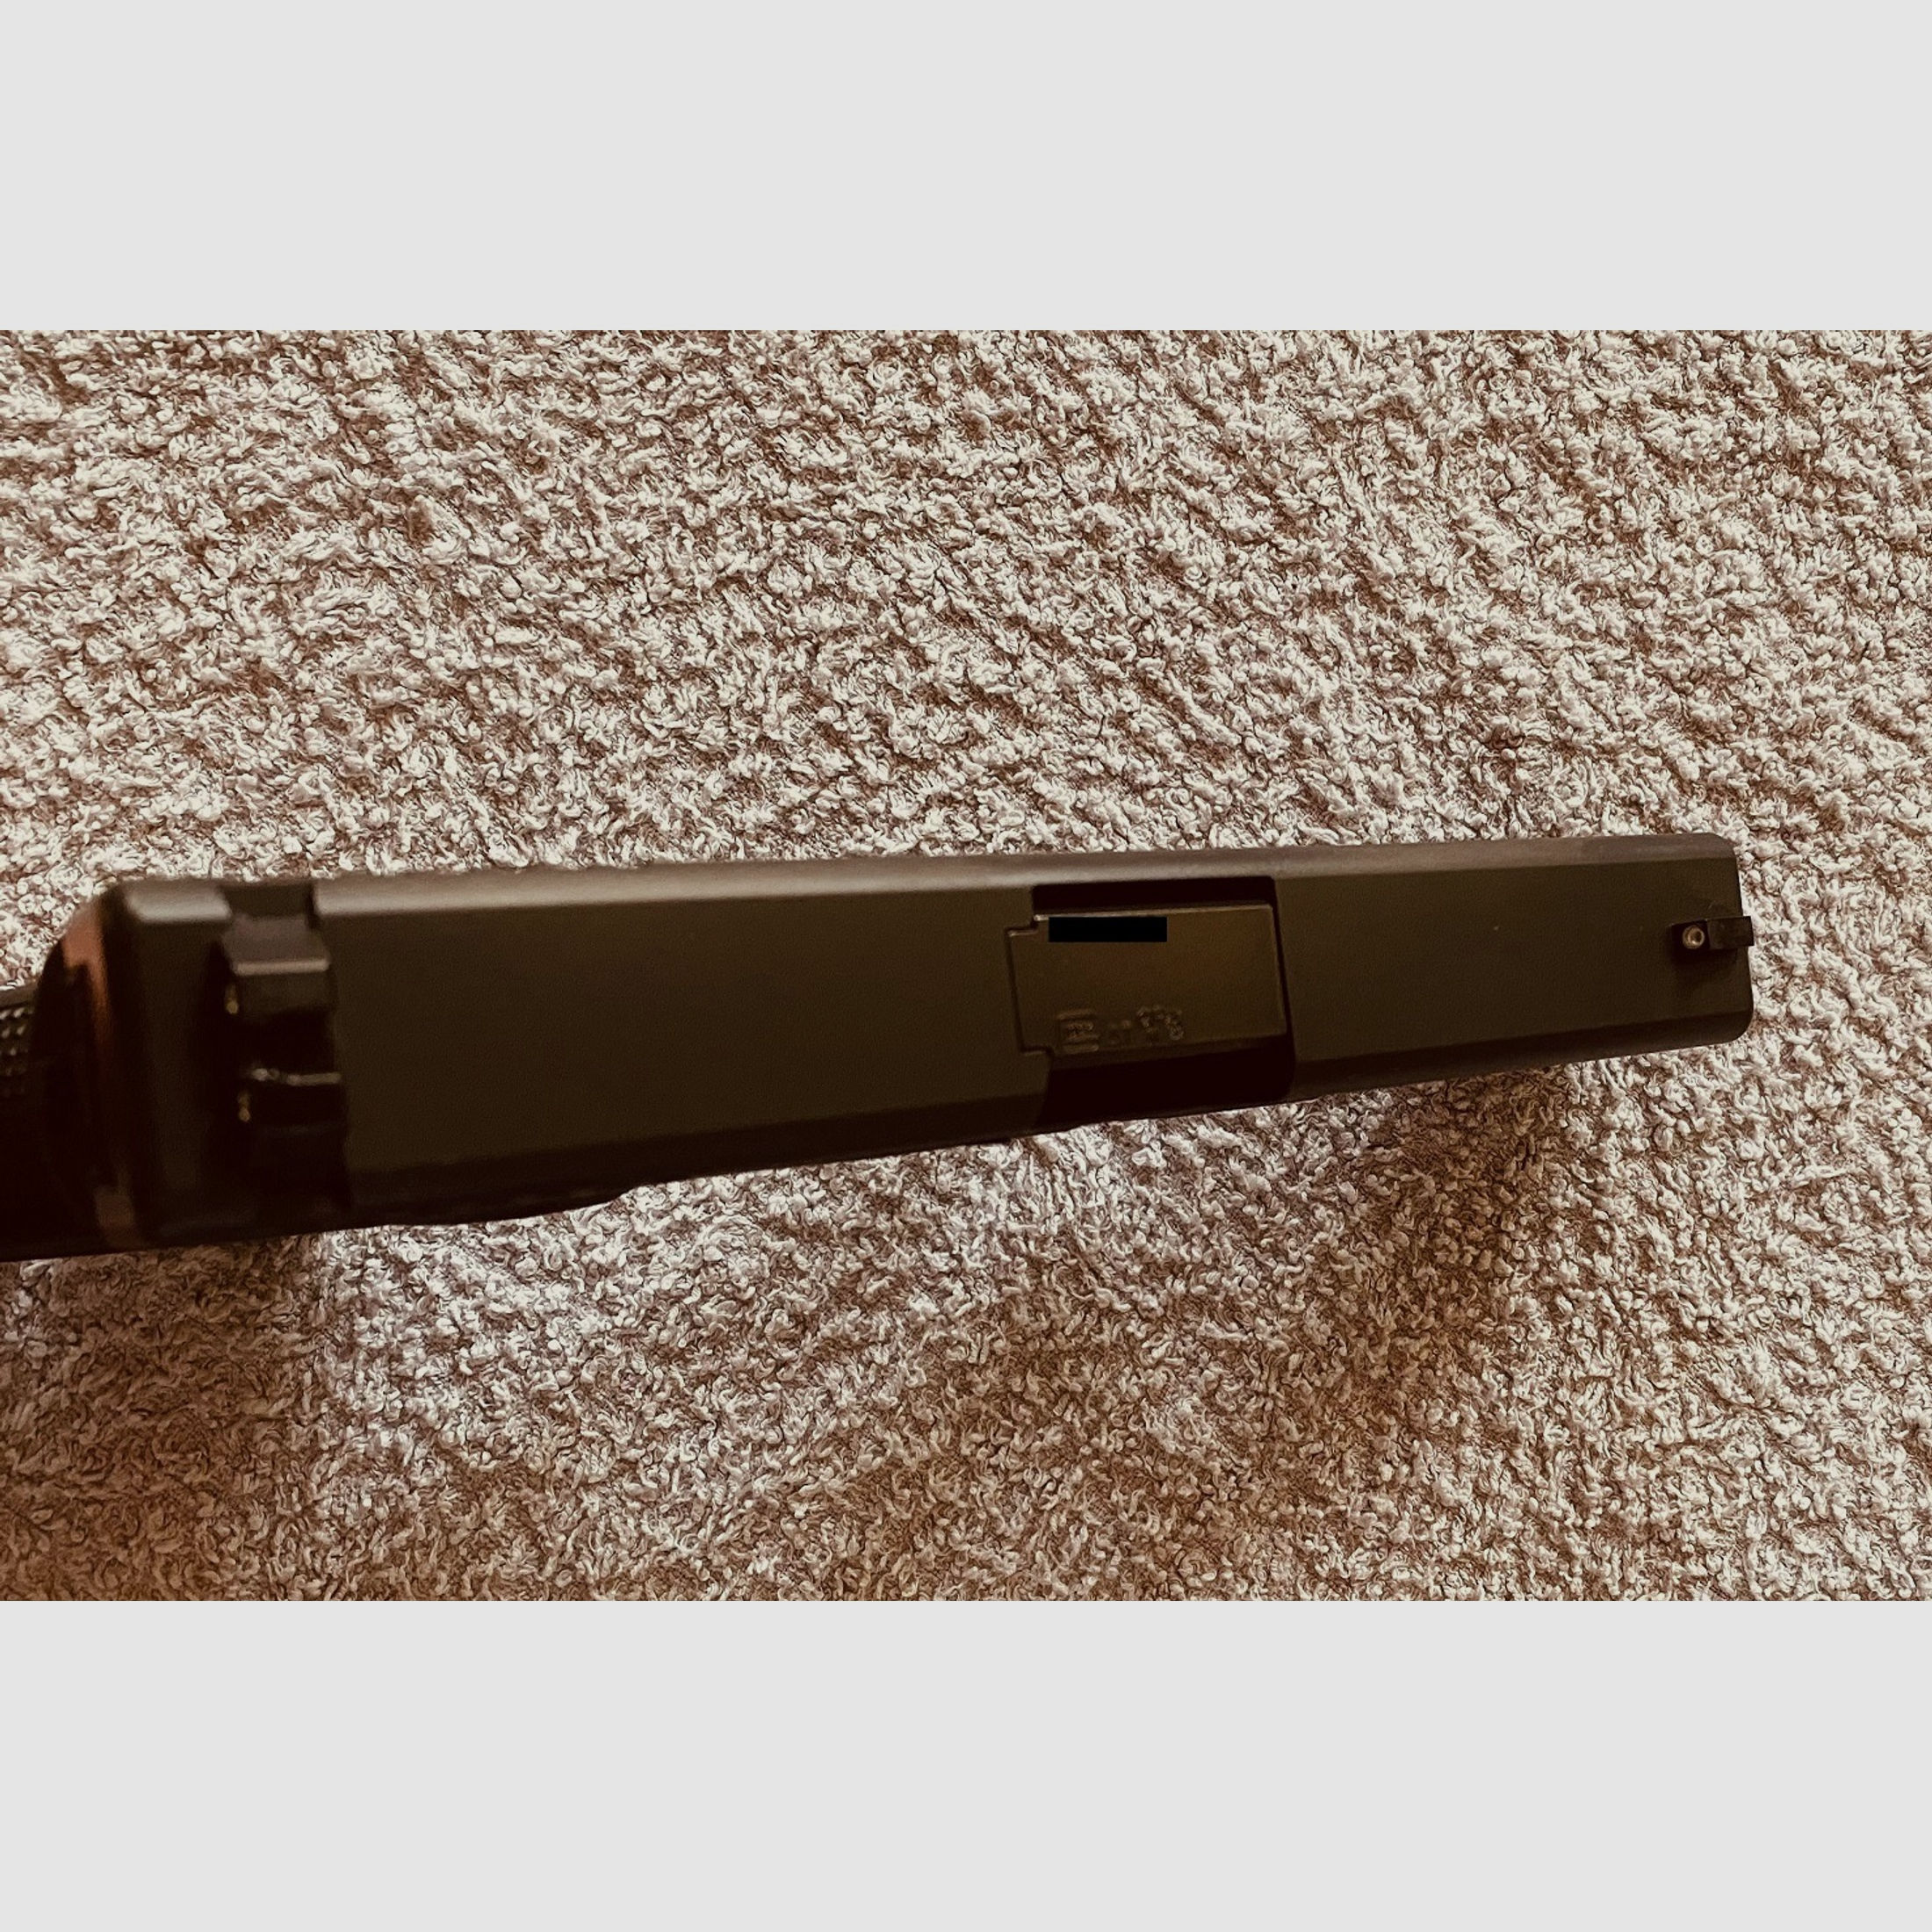 Glock 21 (Kaliber .45 ACP, Gen 4)